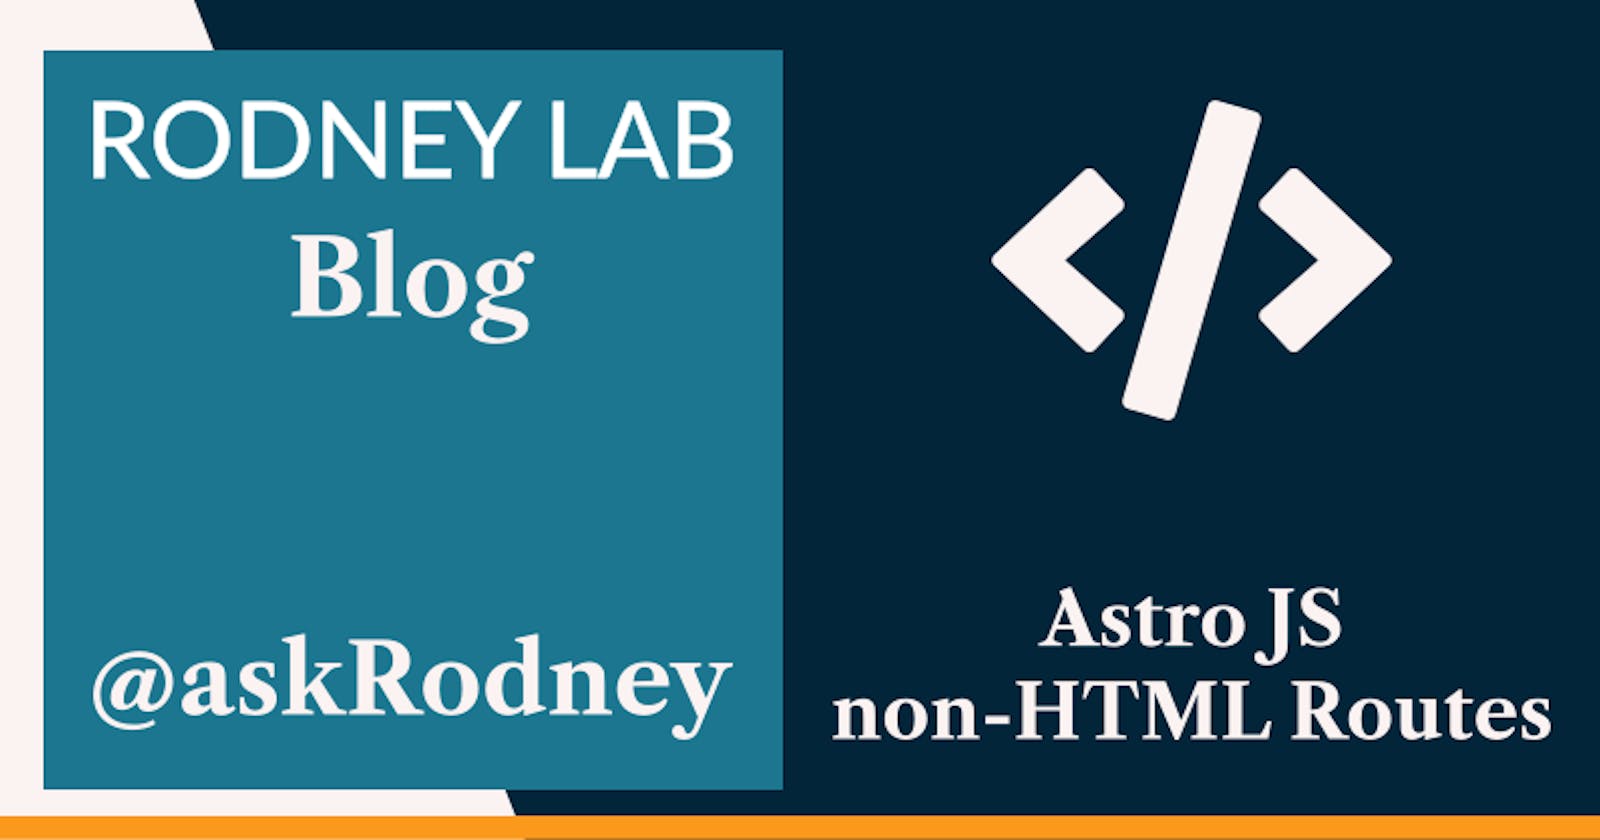 Astro JS non-HTML Routes